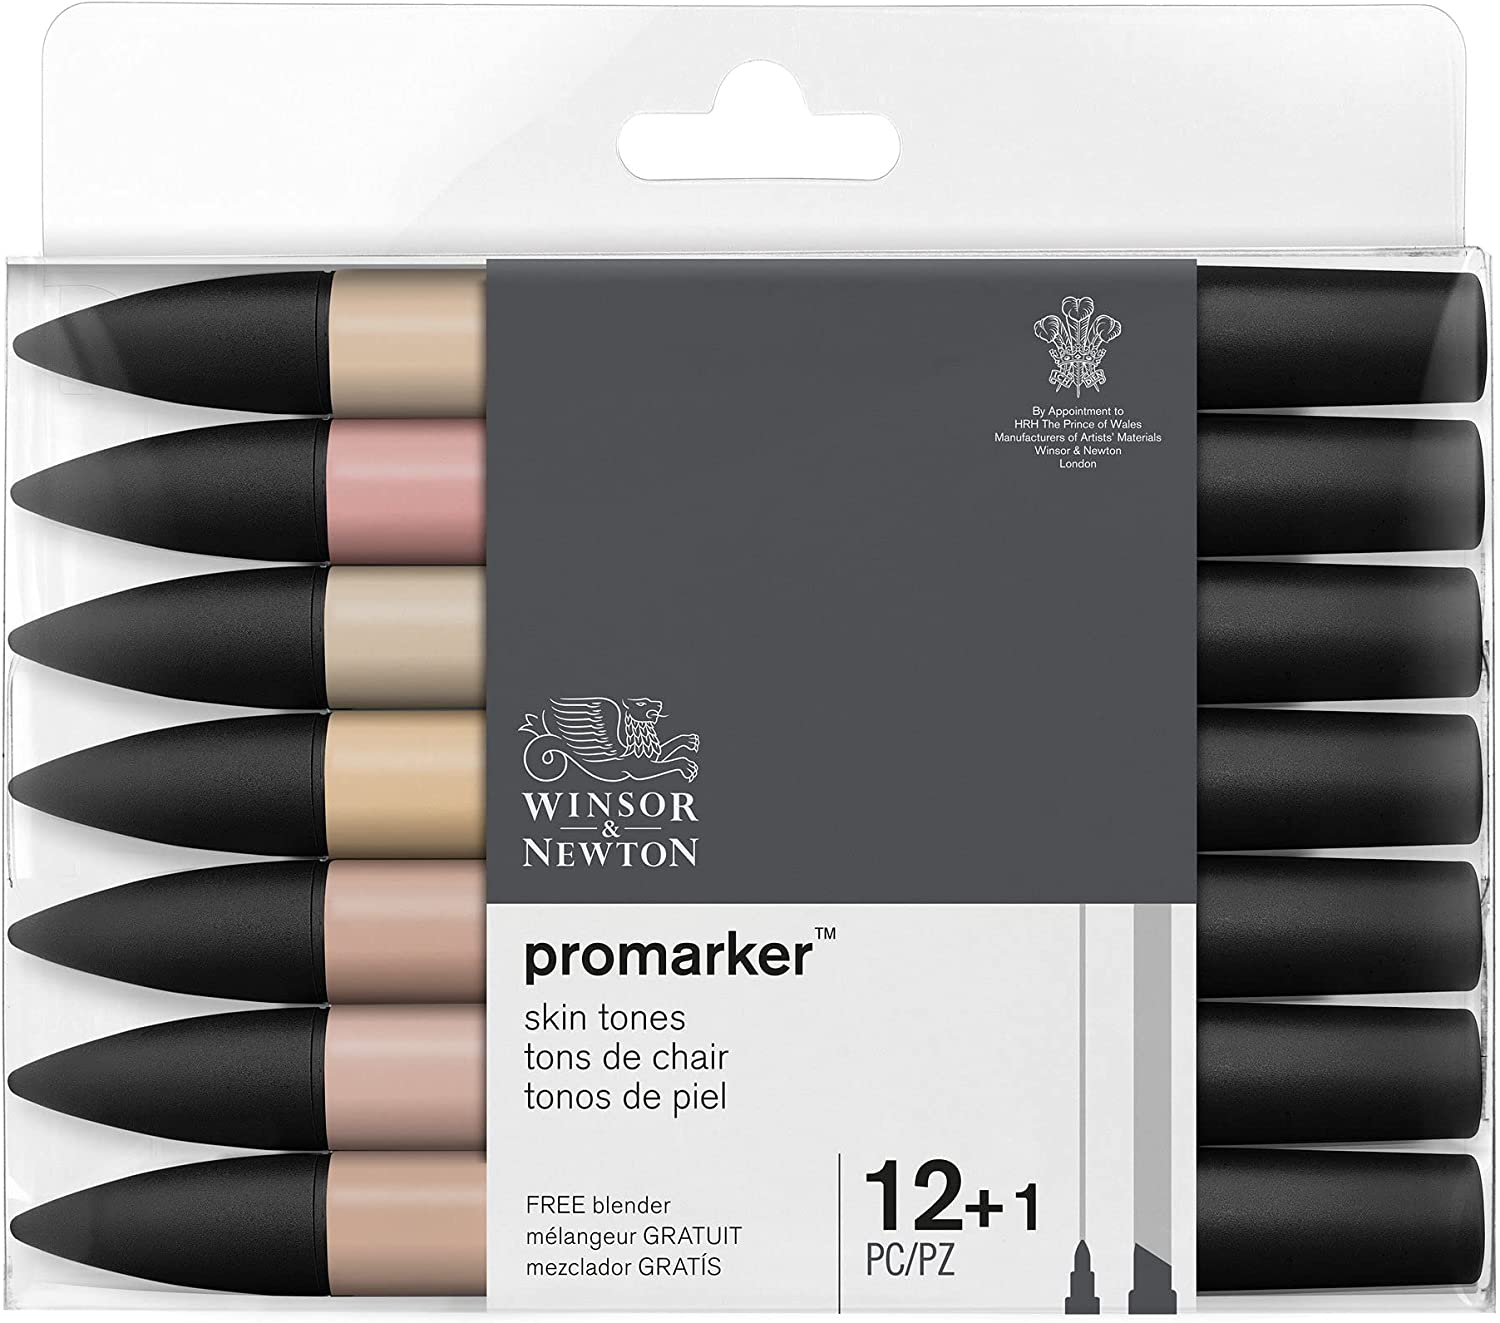 Winsor & Newton - ProMarker 12+1 Hauttöne einstellen